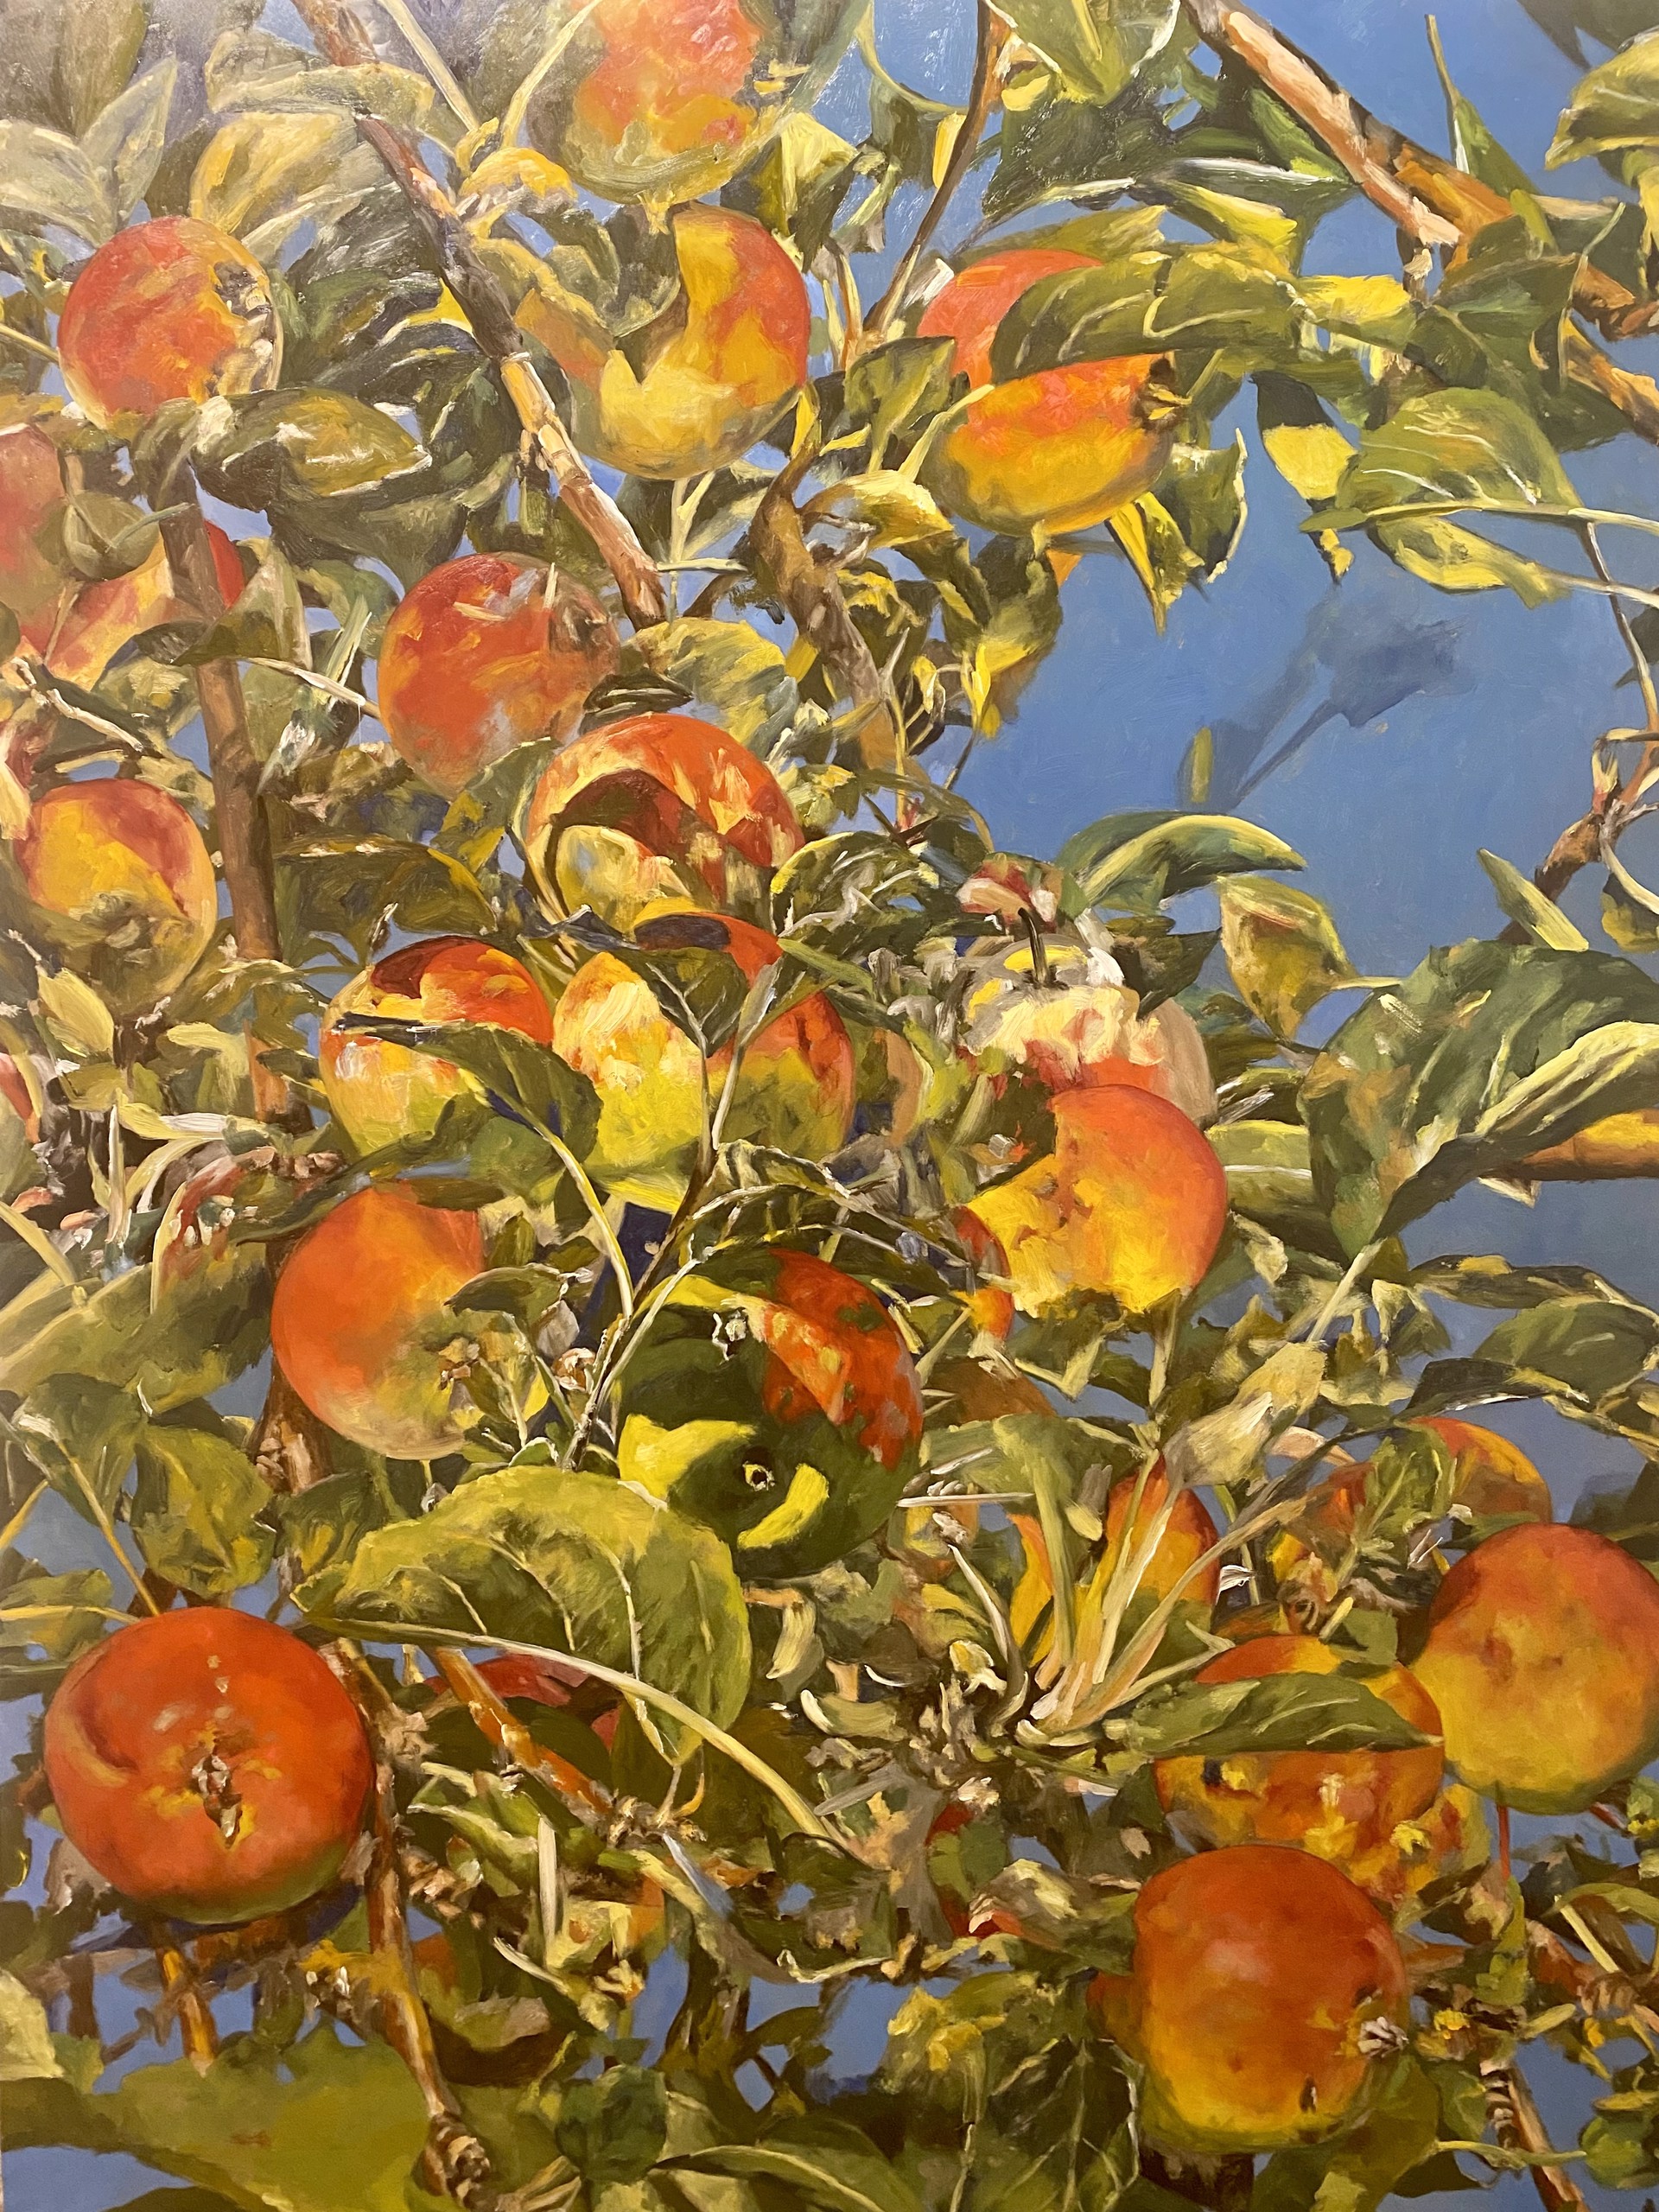 Susan's Apples by Malou Flato